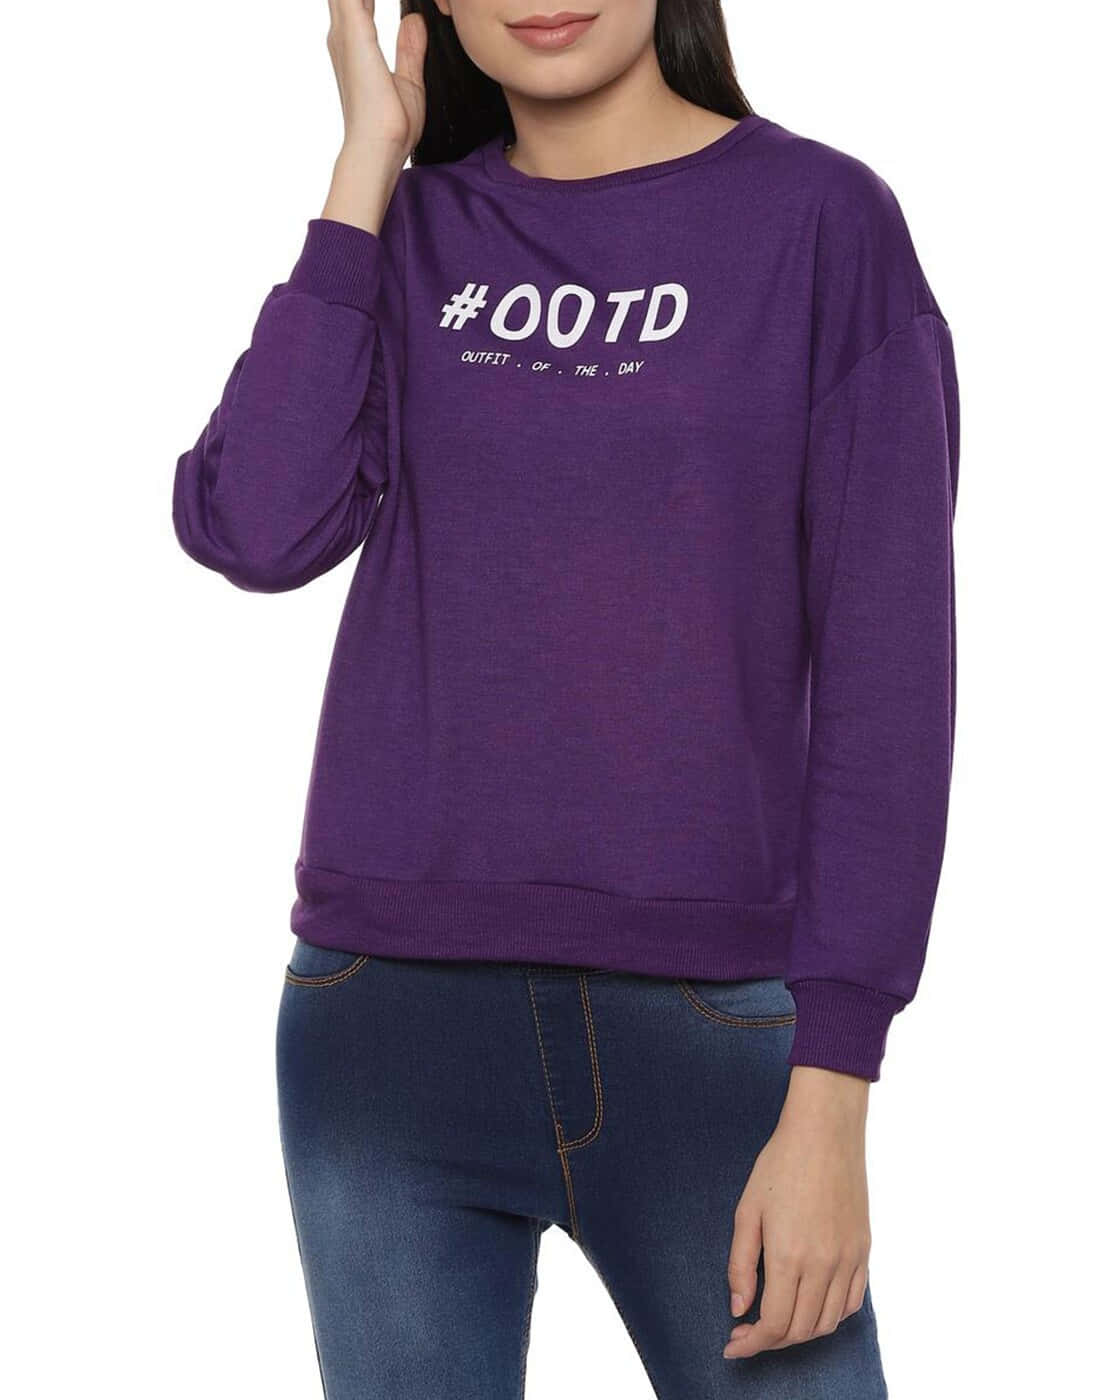 Stay Warm and Stylish in This Purple Sweatshirt Wallpaper